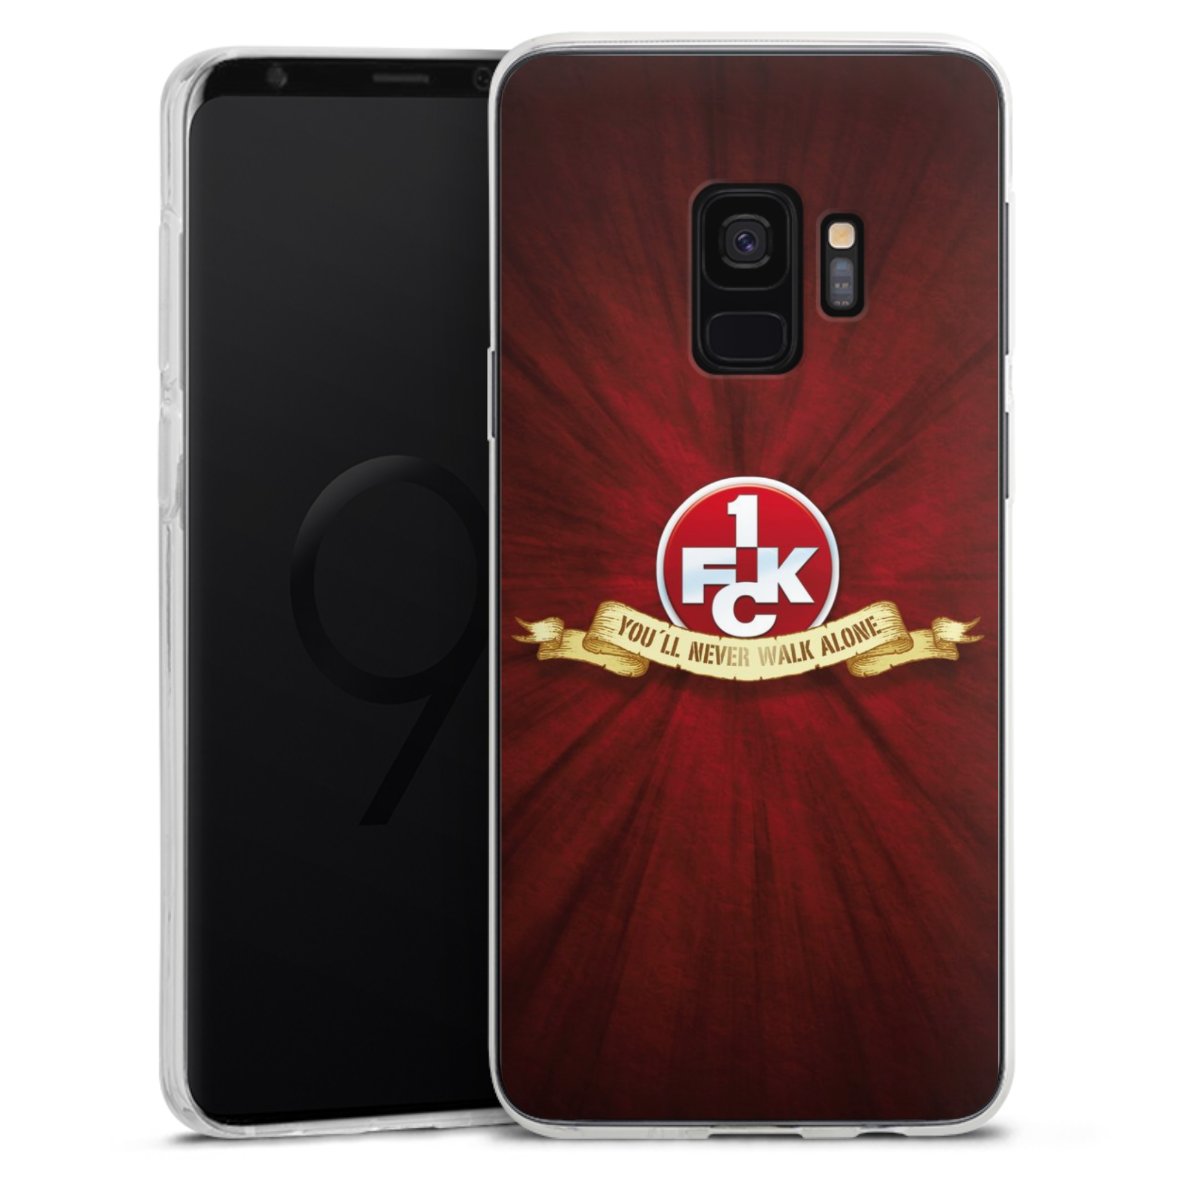 FC Köln Offizielles Lizenzprodukt EffZeh DeinDesign Silikon Hülle kompatibel mit Samsung Galaxy S7 Case schwarz Handyhülle 1 